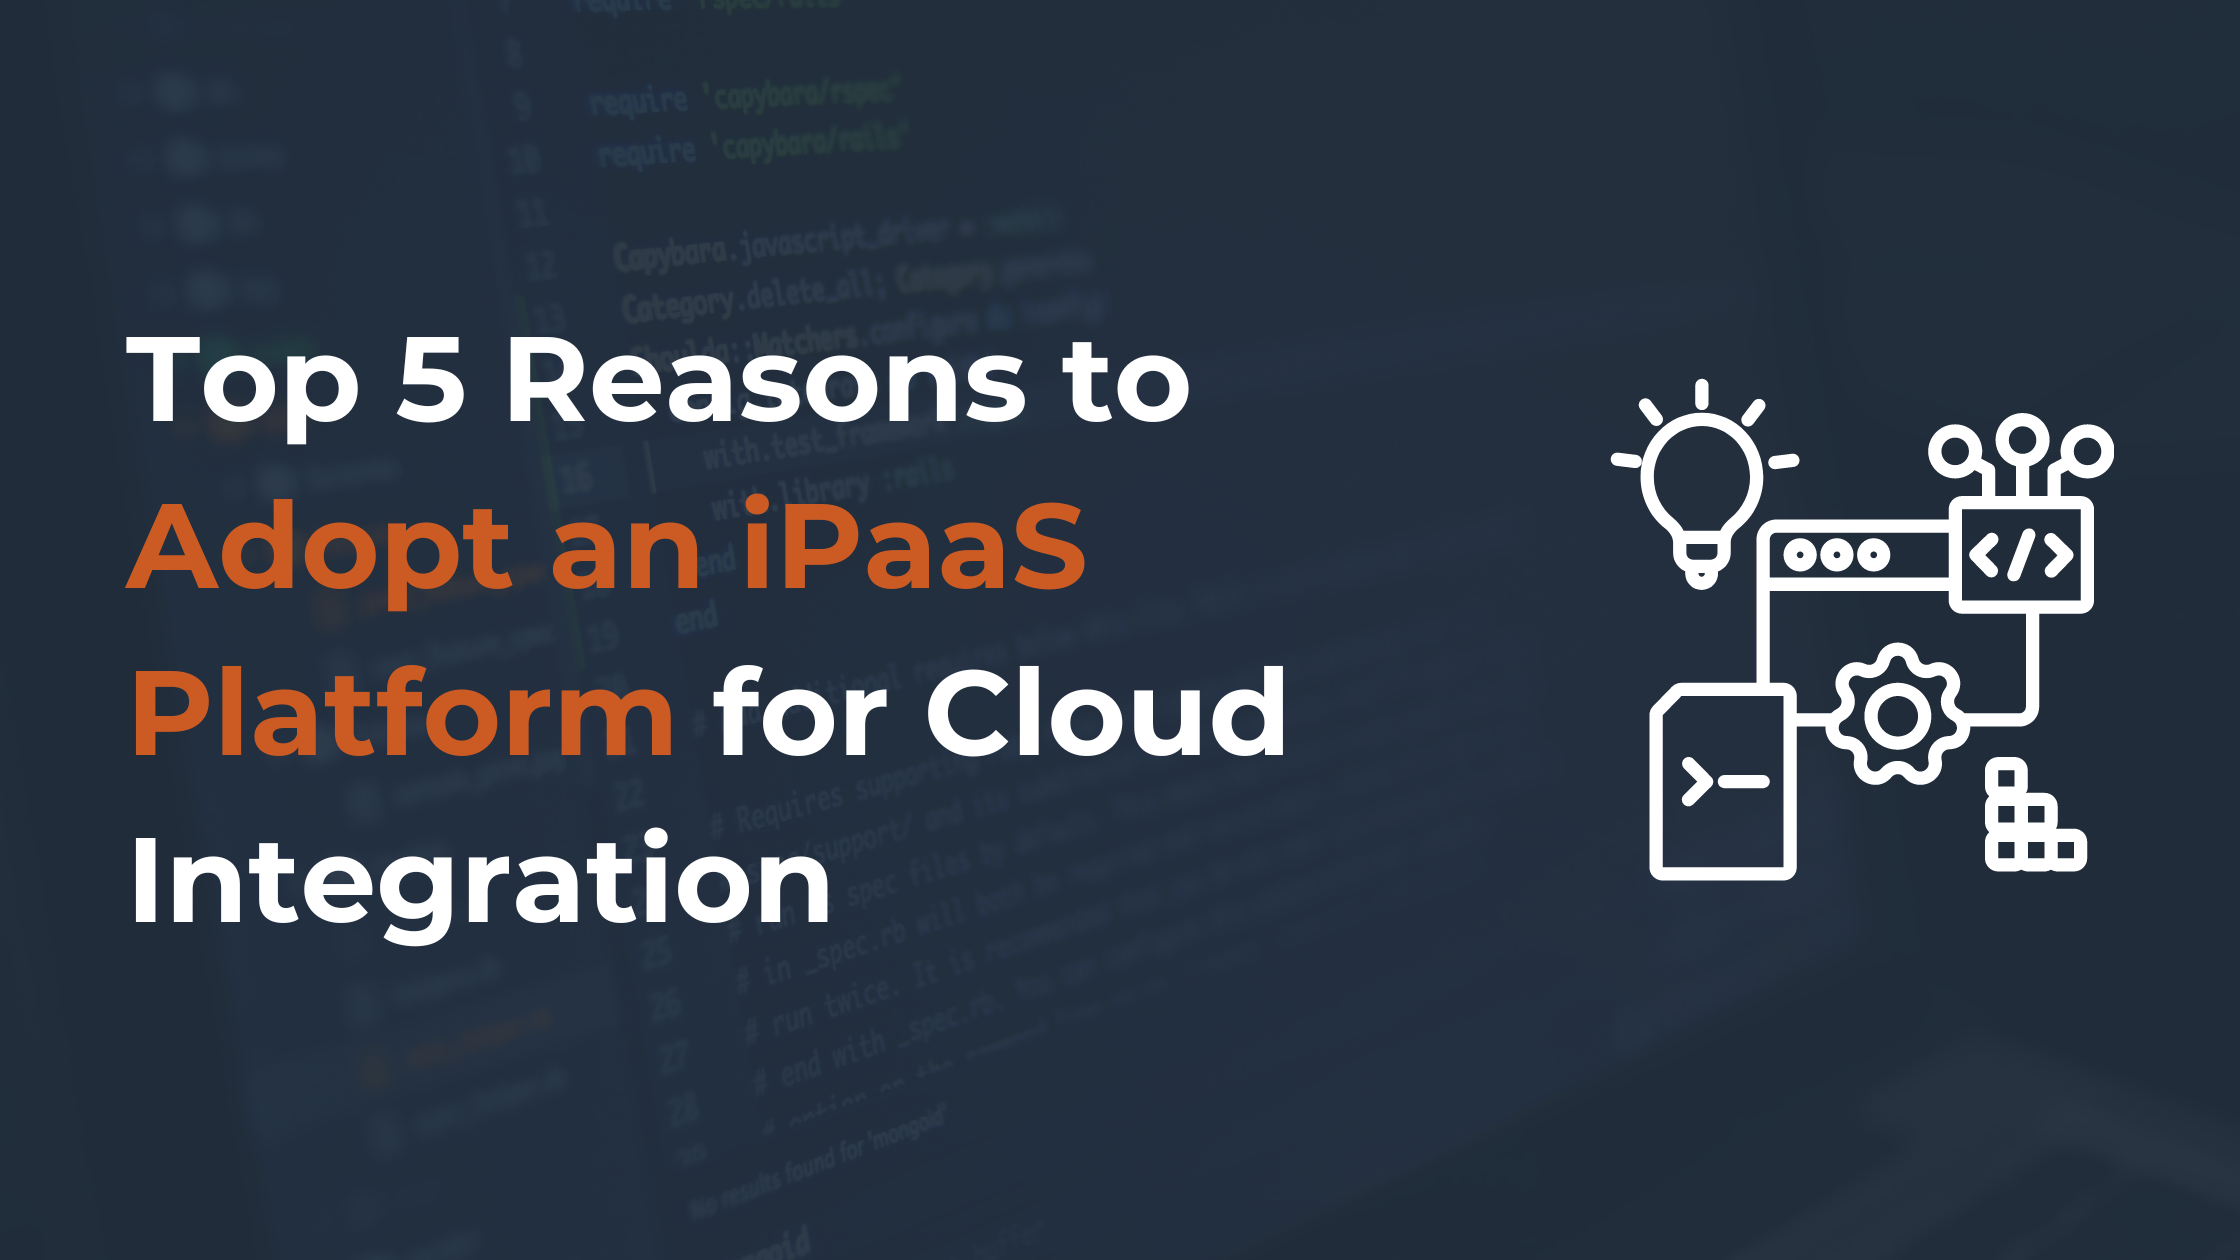 Top 5 Reasons to Adopt an iPaaS Platform for Cloud Integration